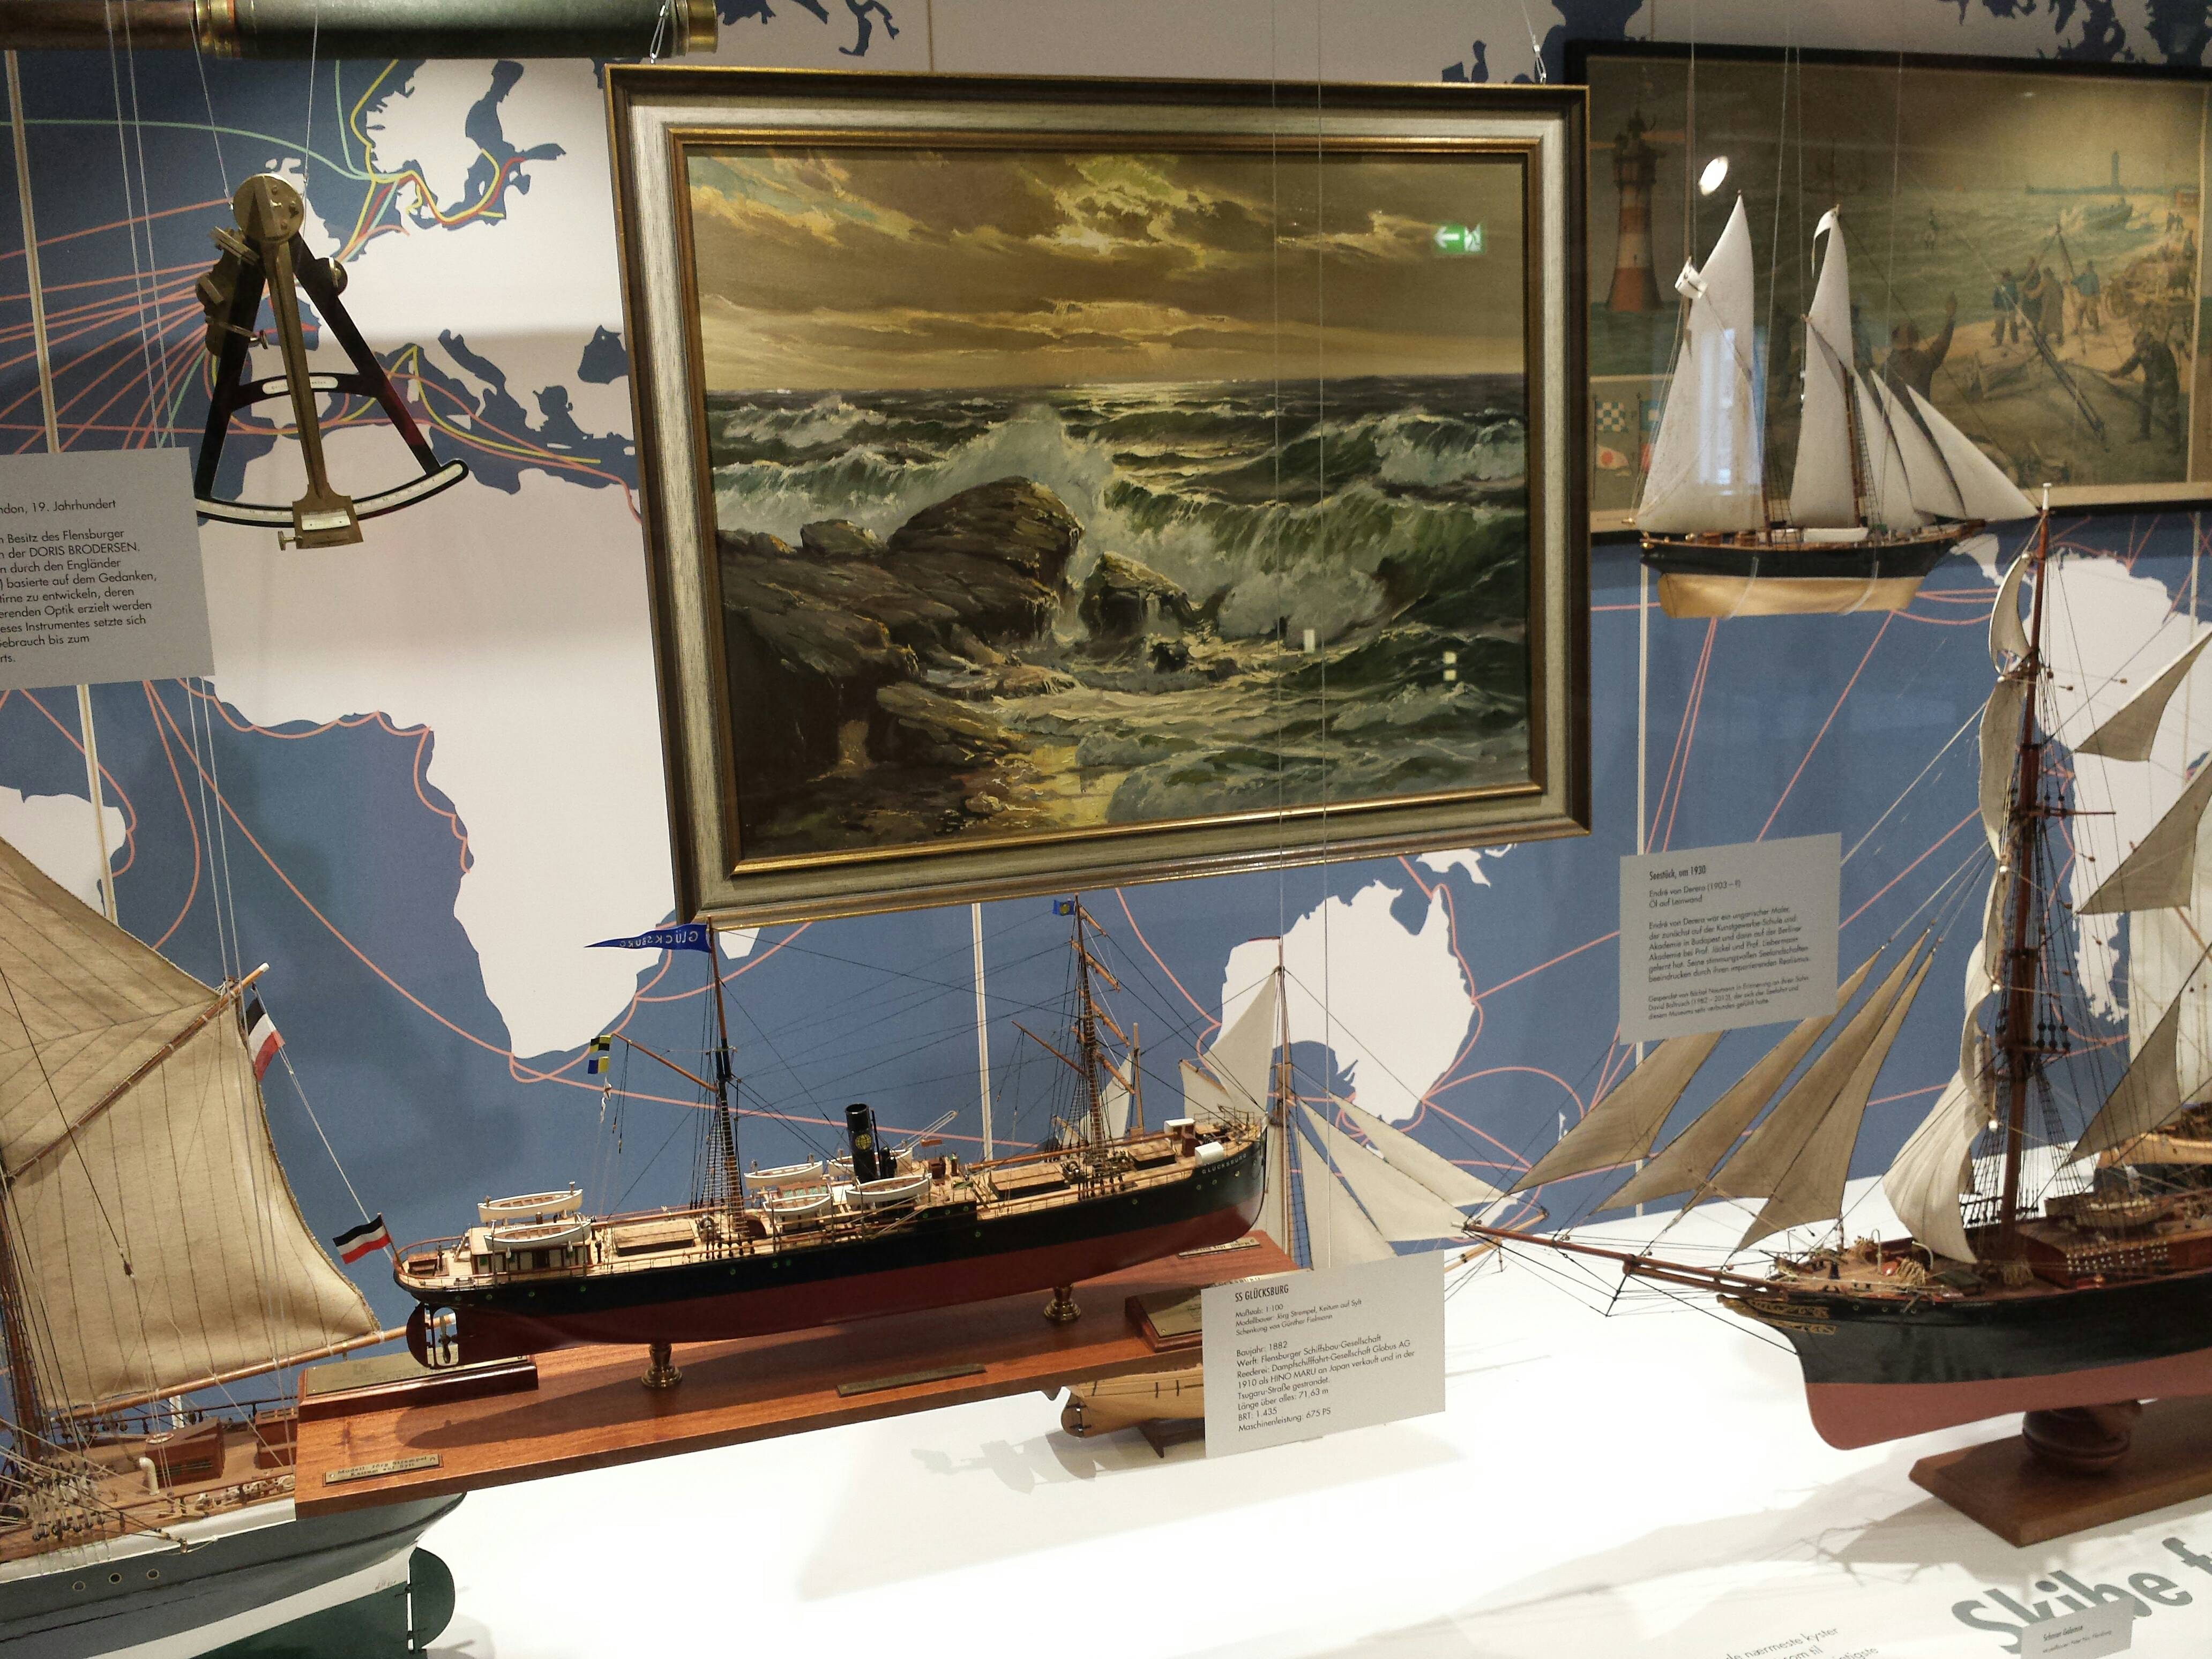 Bild 40 Rum-Museum im Schifffahrtsmuseum in Flensburg